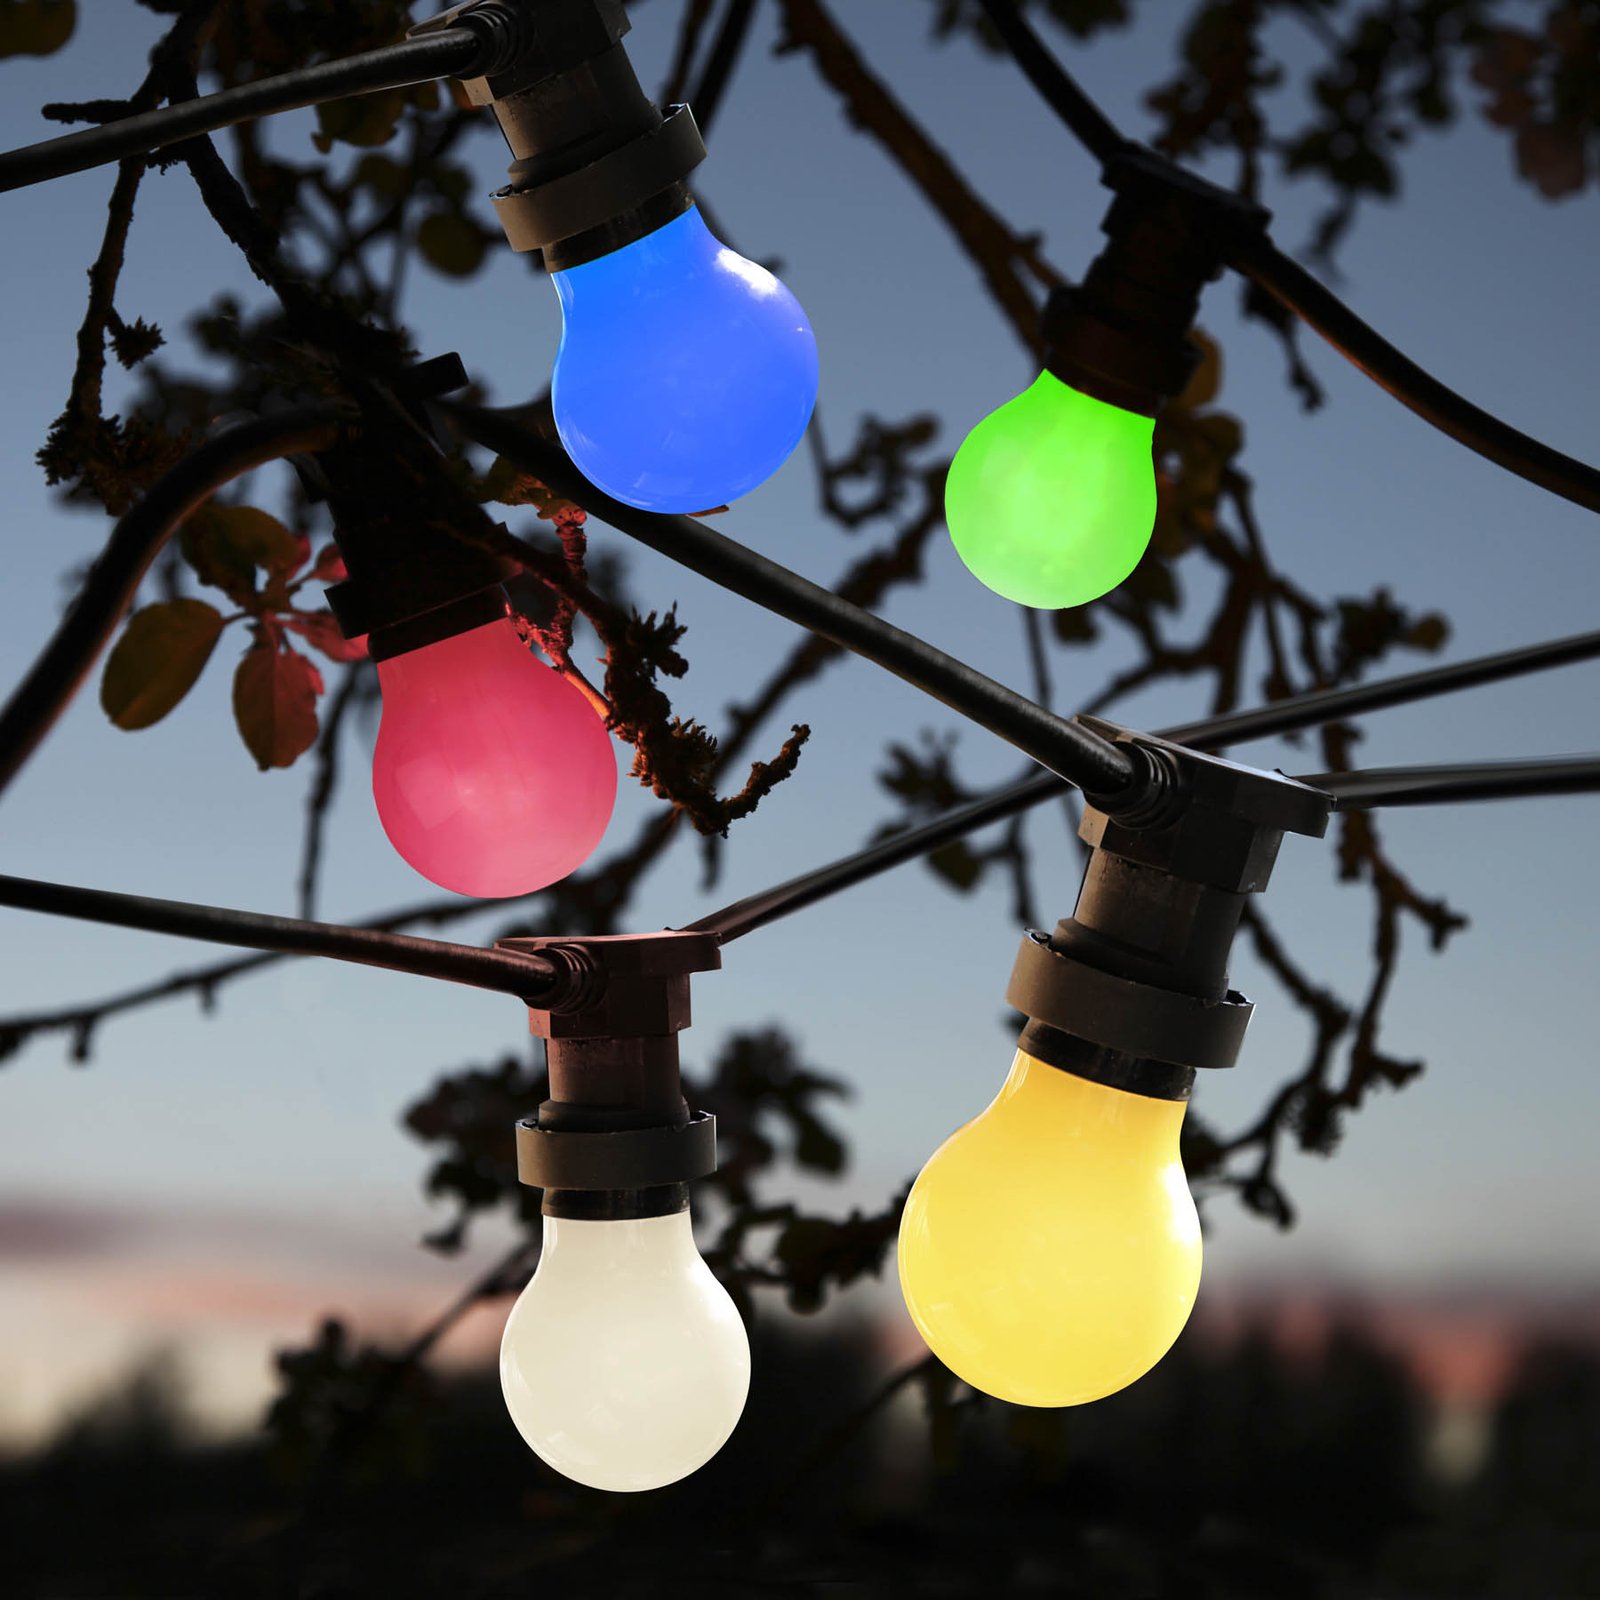 E27 LED bulb for fairy lights, shatterproof, yellow